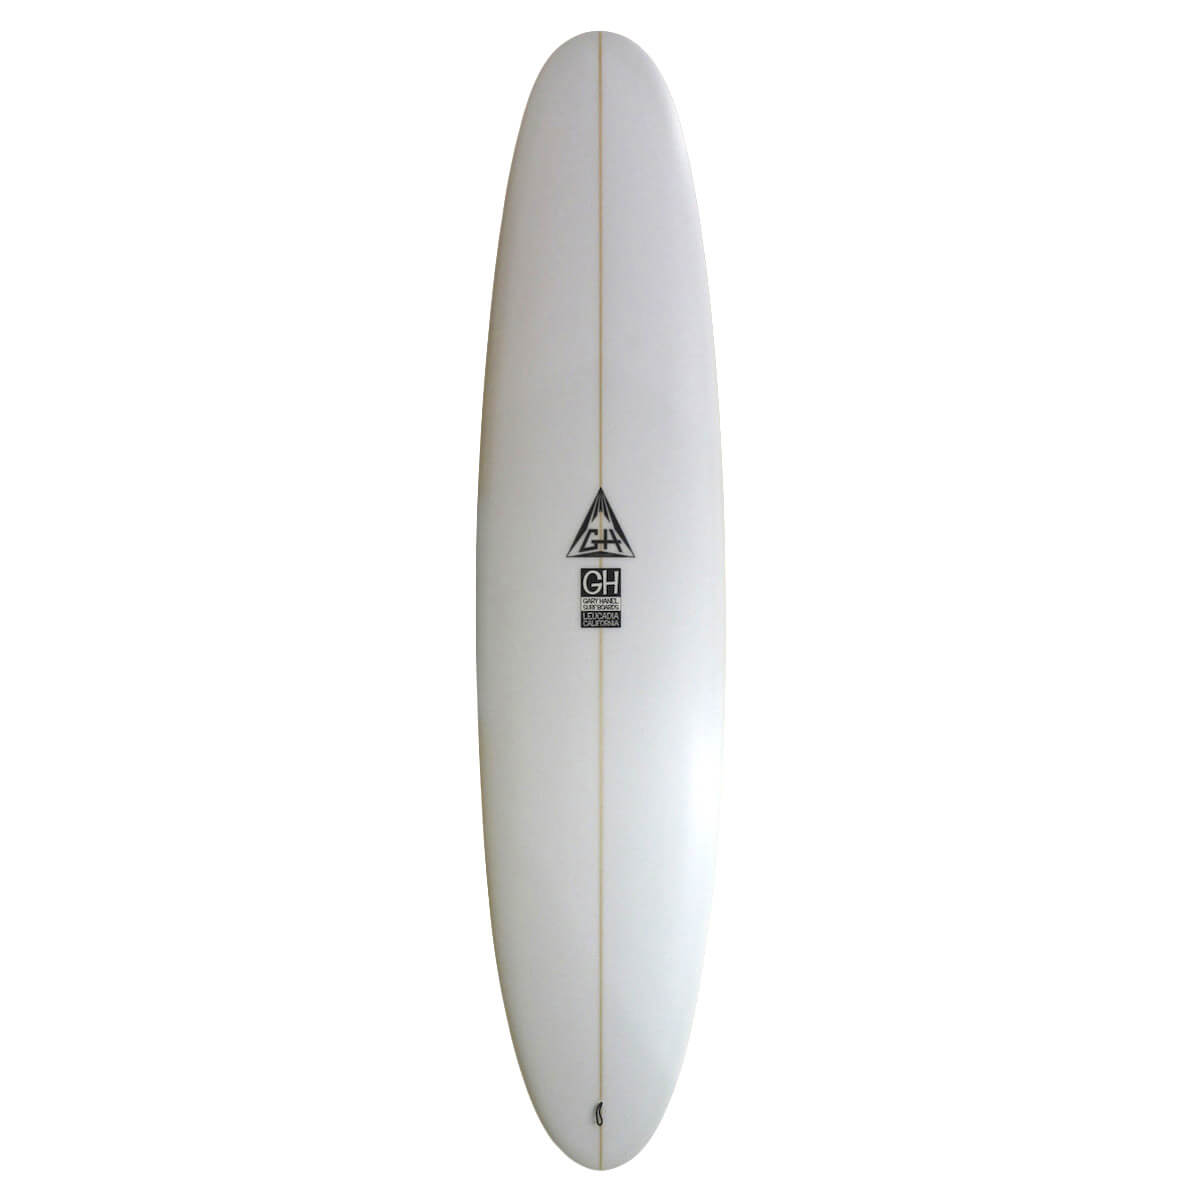 Gary Hanel Surfboards : Involvement